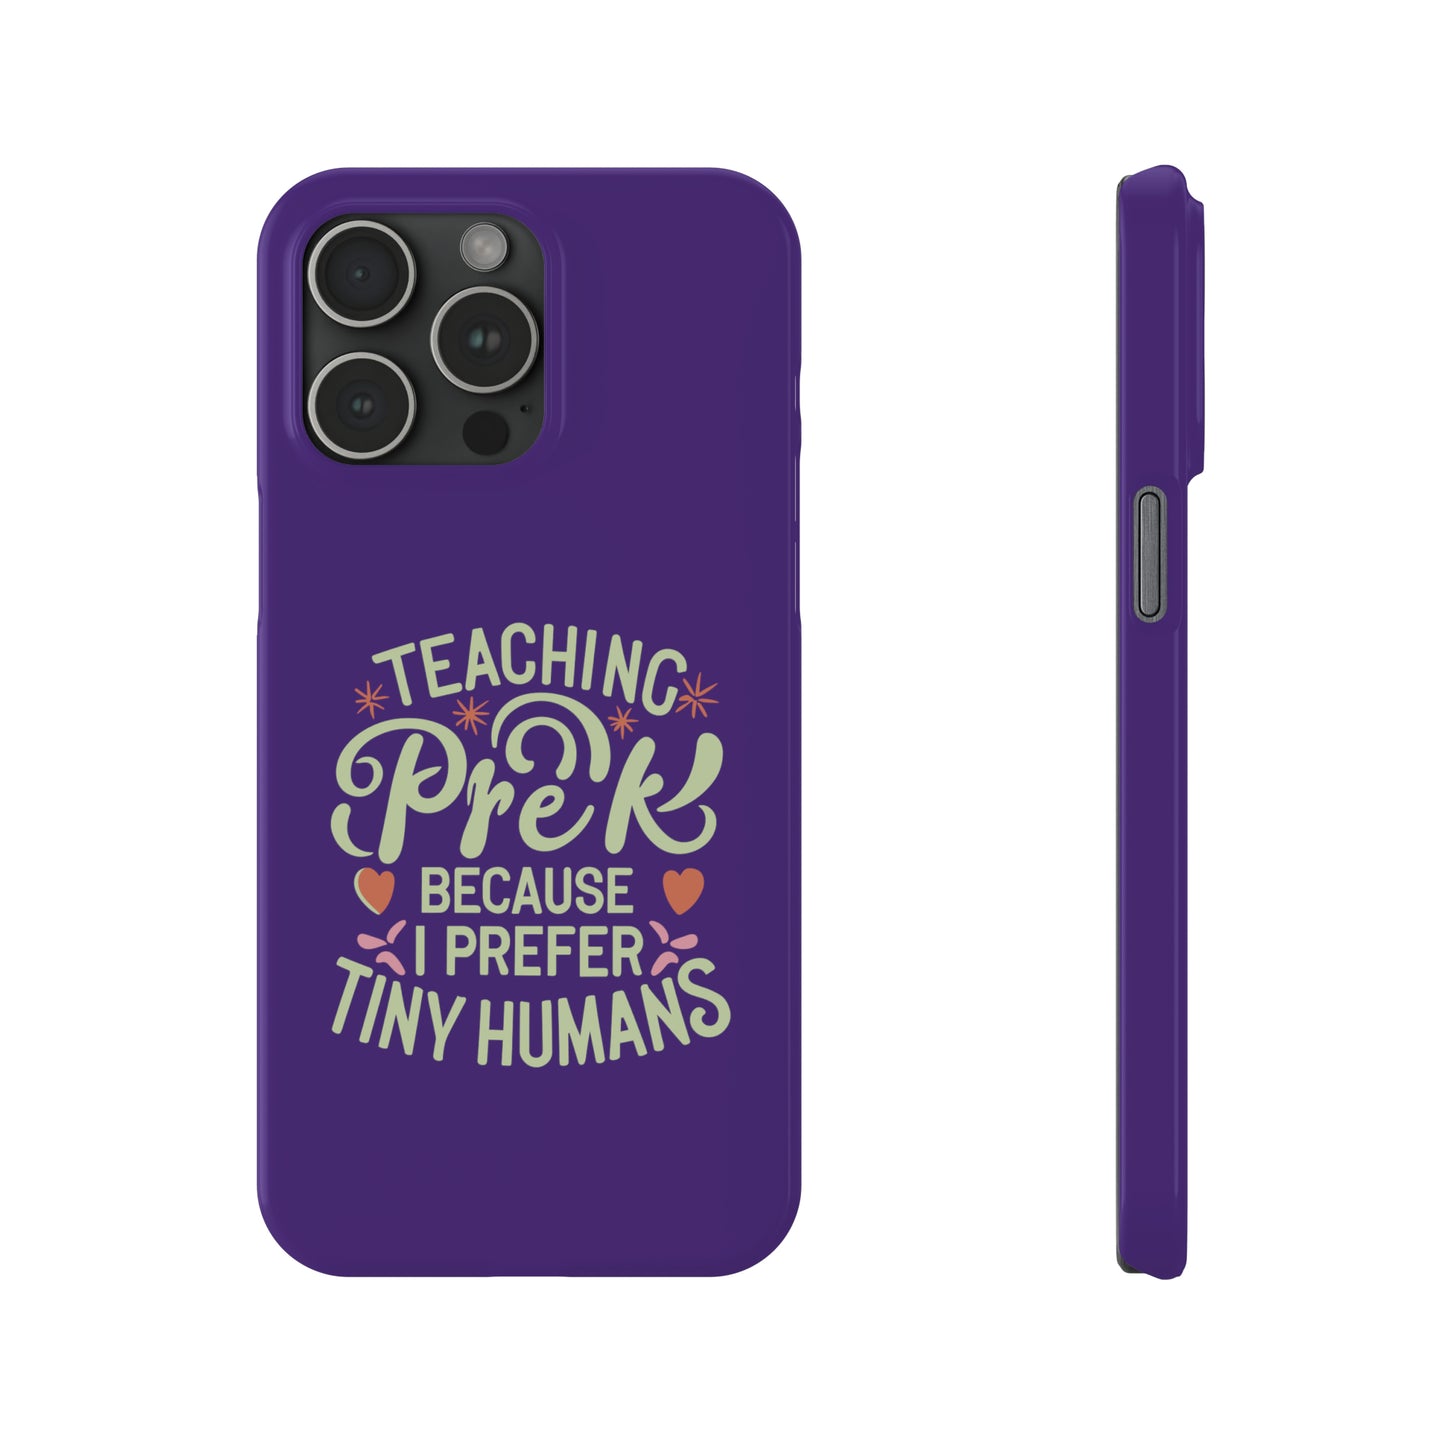 PreK Teacher Slim Phone Case - "Teaching PreK Because I Prefer Tiny Humans"